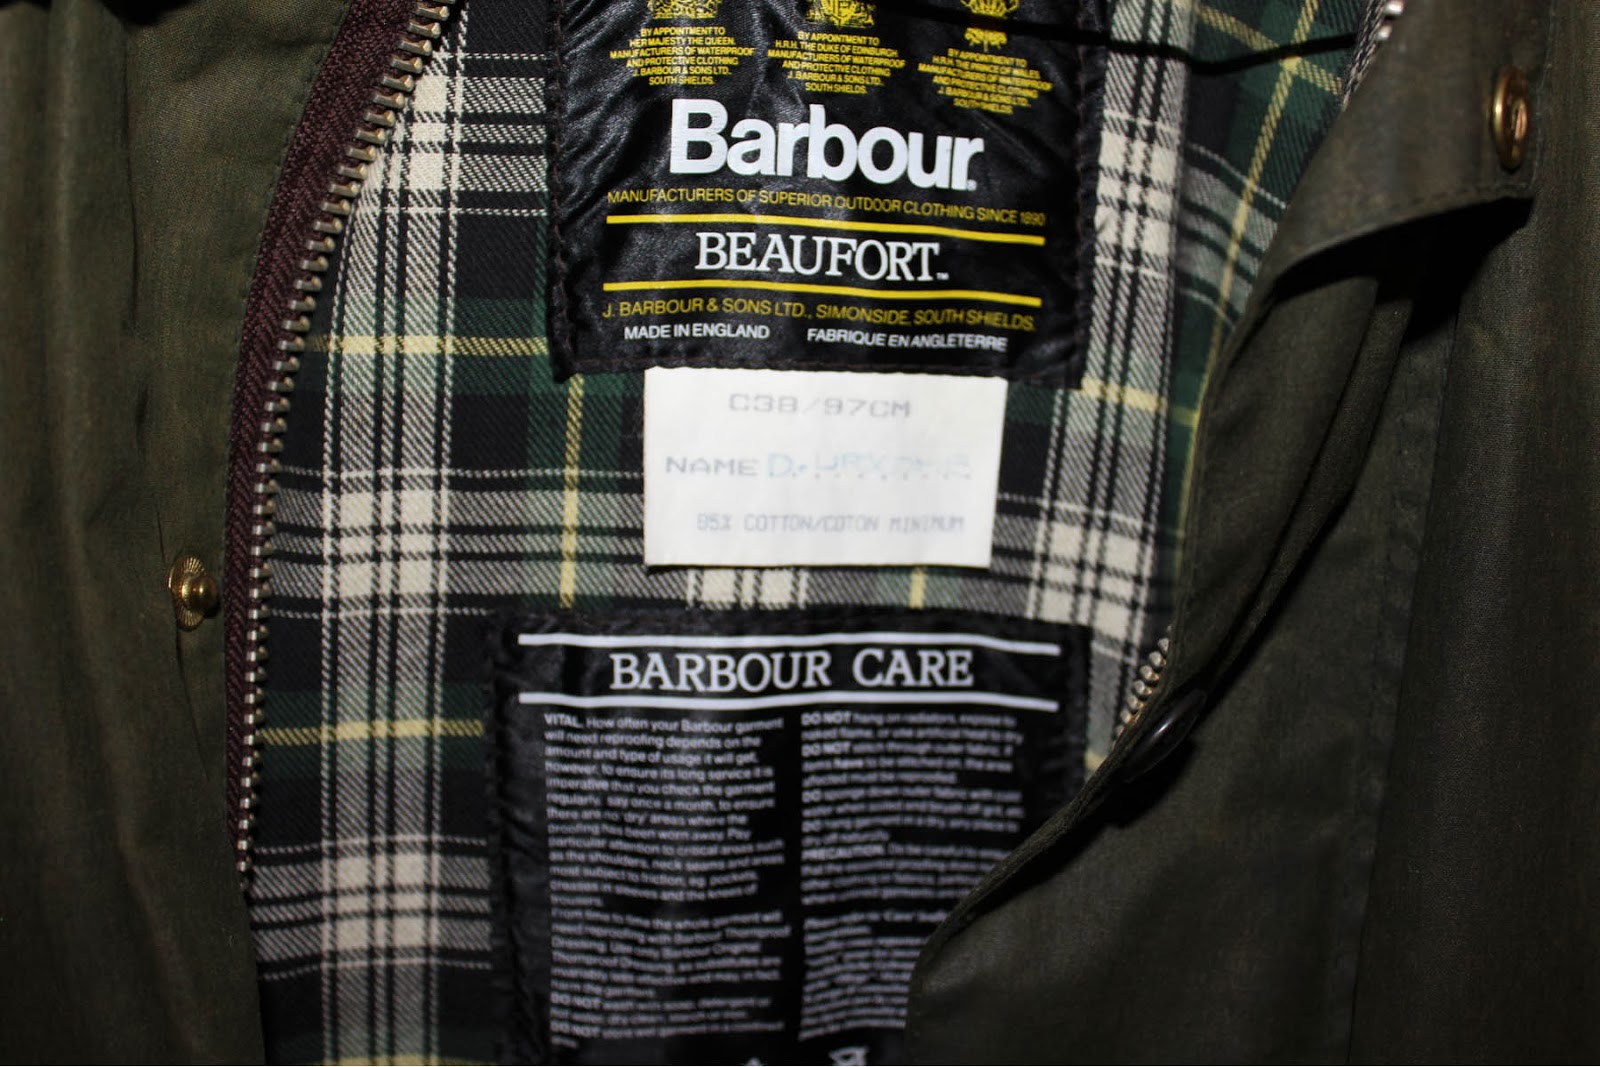 BANG BLITZ / Fashion, Film and Food Blog / Cassy Bhairo: Barbour Jacket